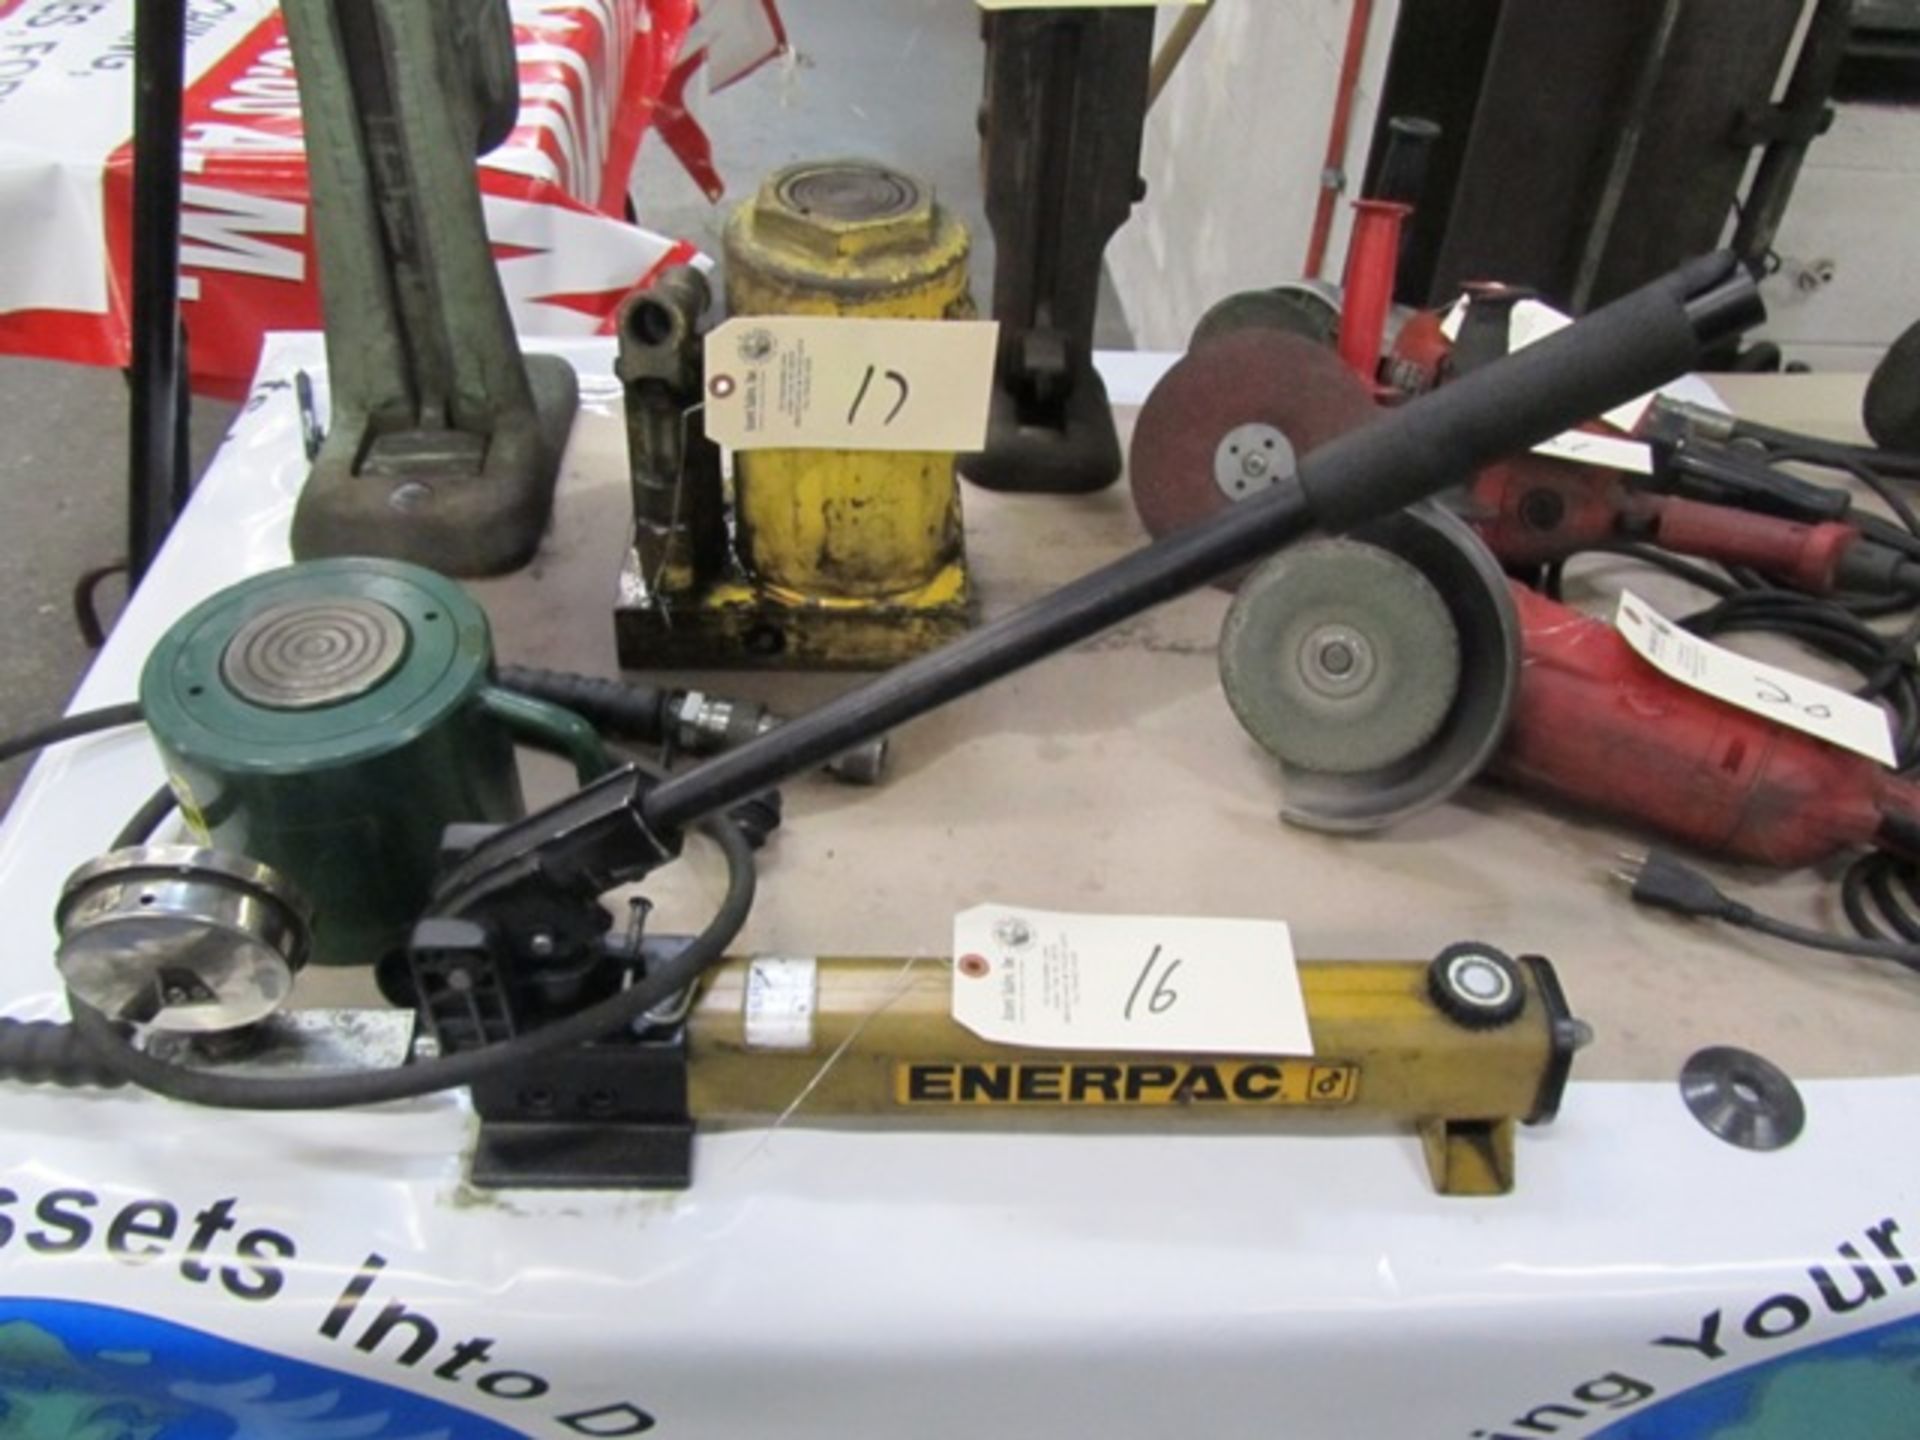 Enerpac Hydraulic Pump with Jack